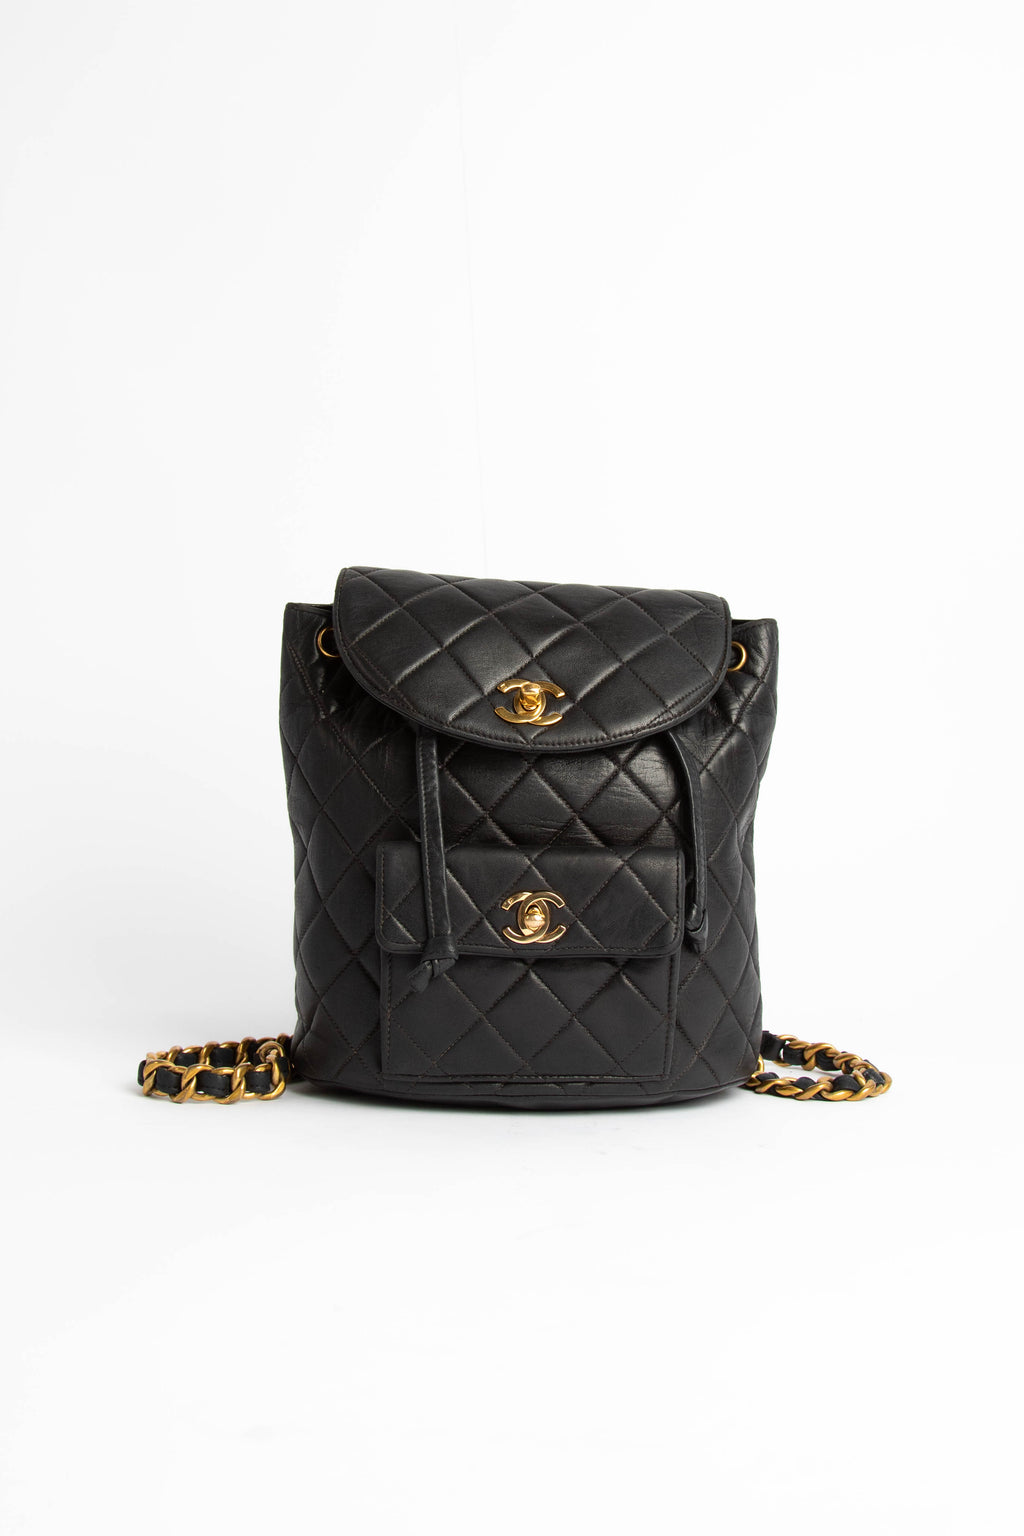 RARE Vintage Chanel Black Leather Duma Backpack with 24K GHW